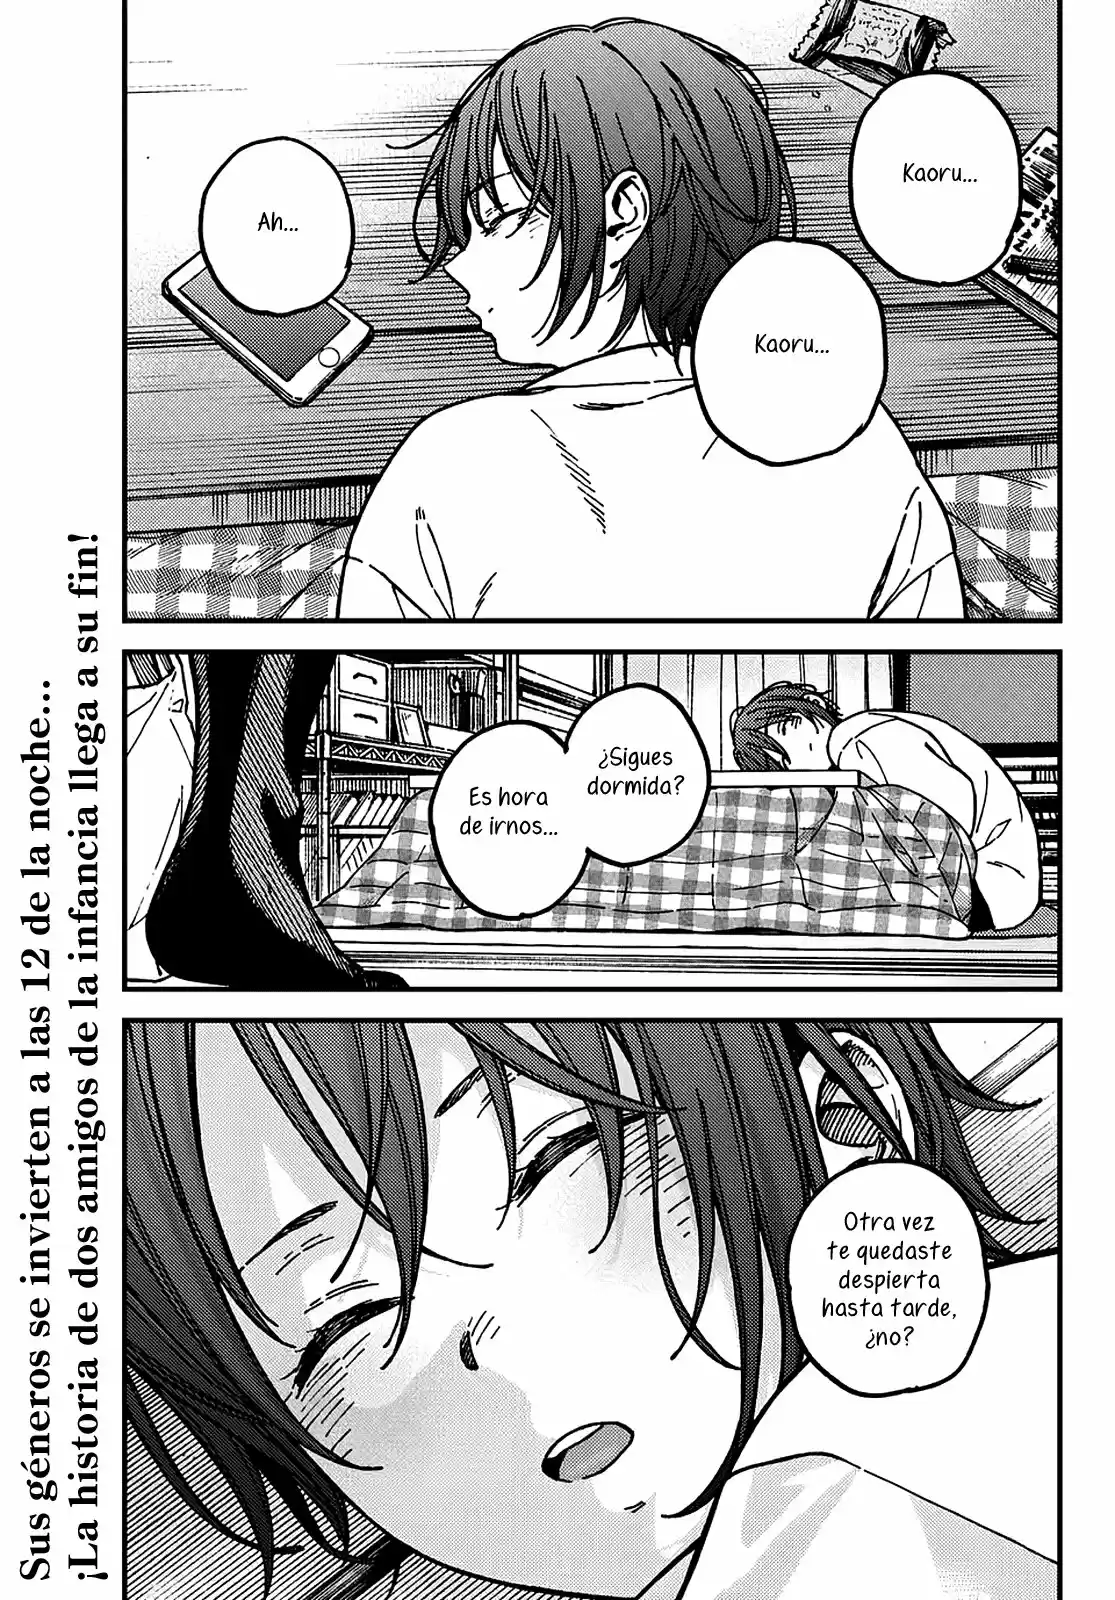 Jun Y Kaoru: Chapter 16 - Page 1